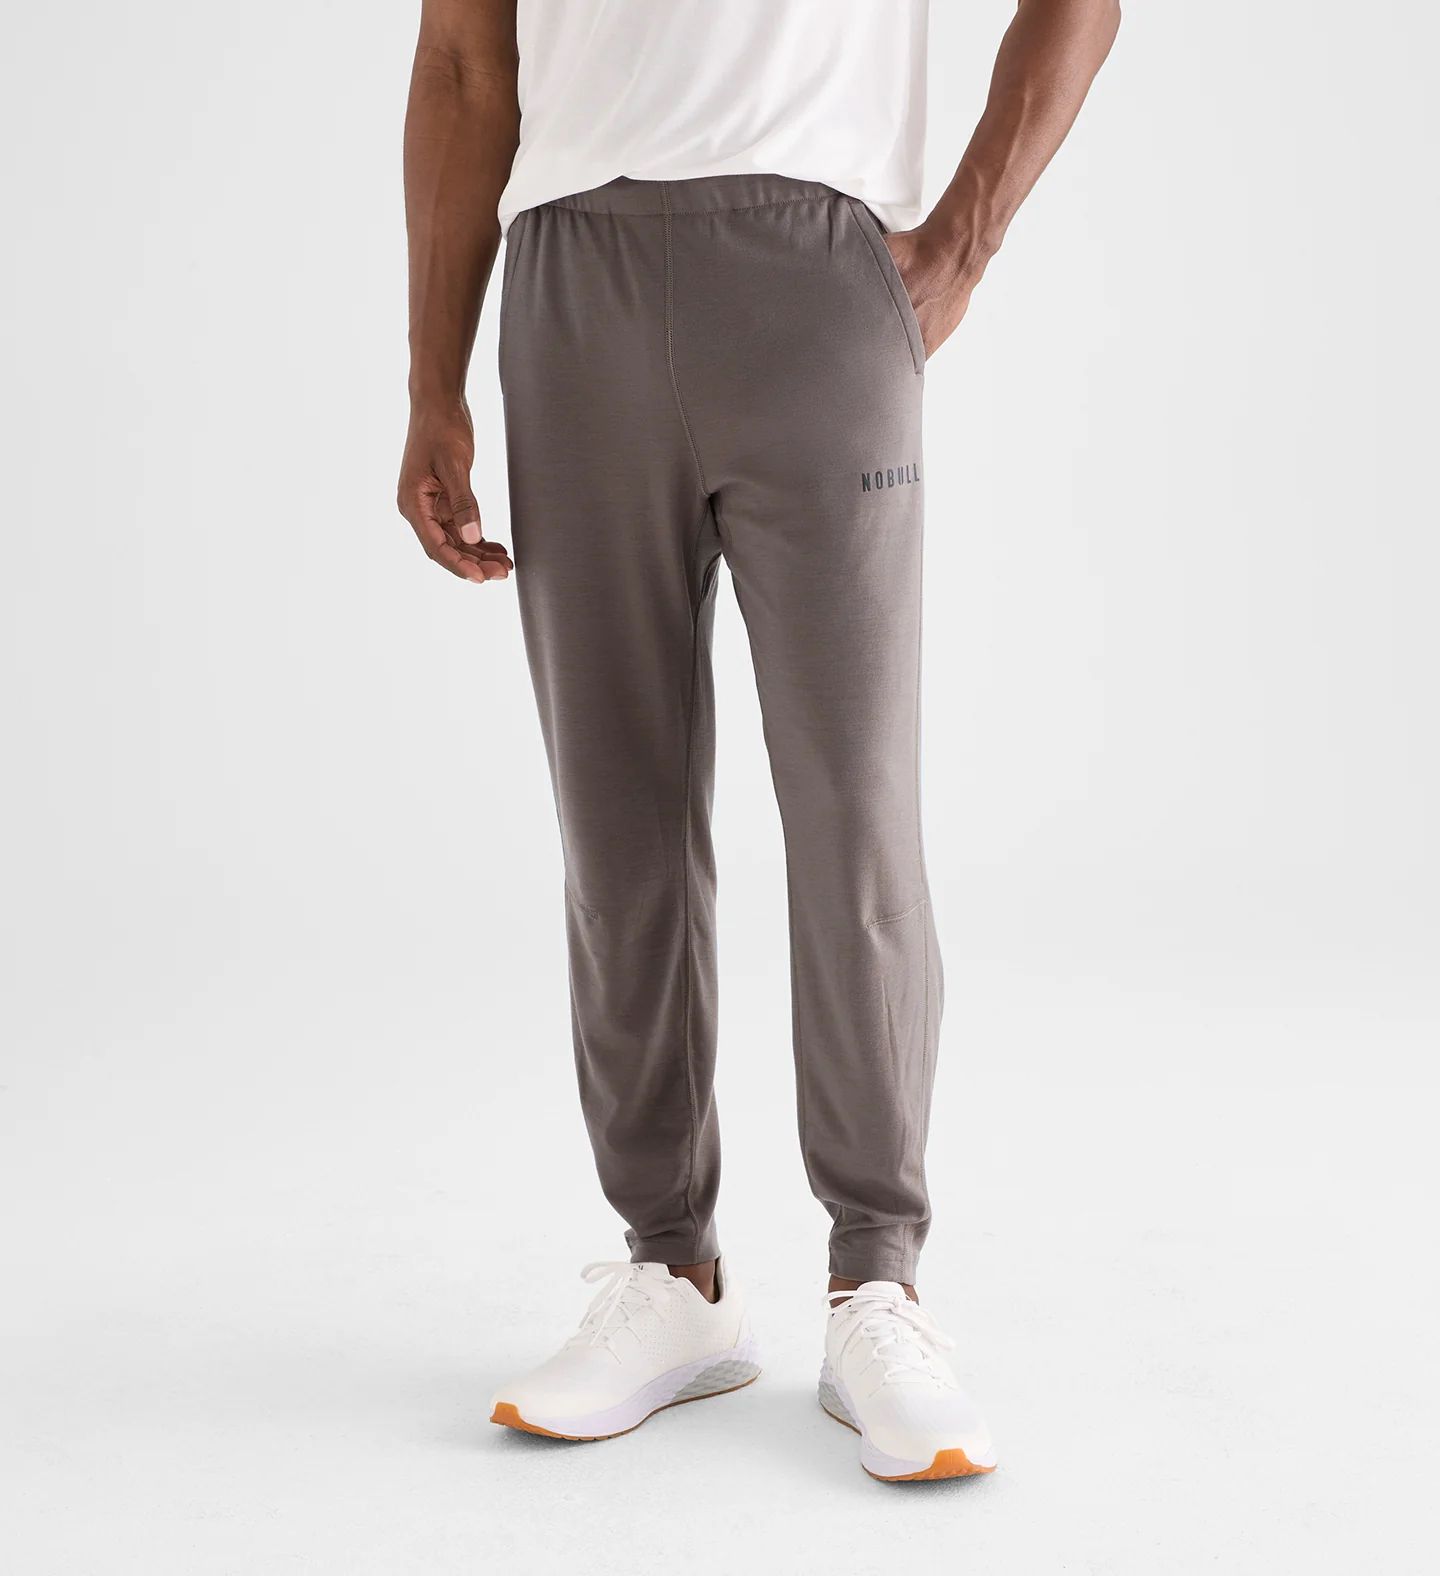 Mens Nike Pants: Large Selection of Mens Nike Joggers and Sweatpants |  Kohl's